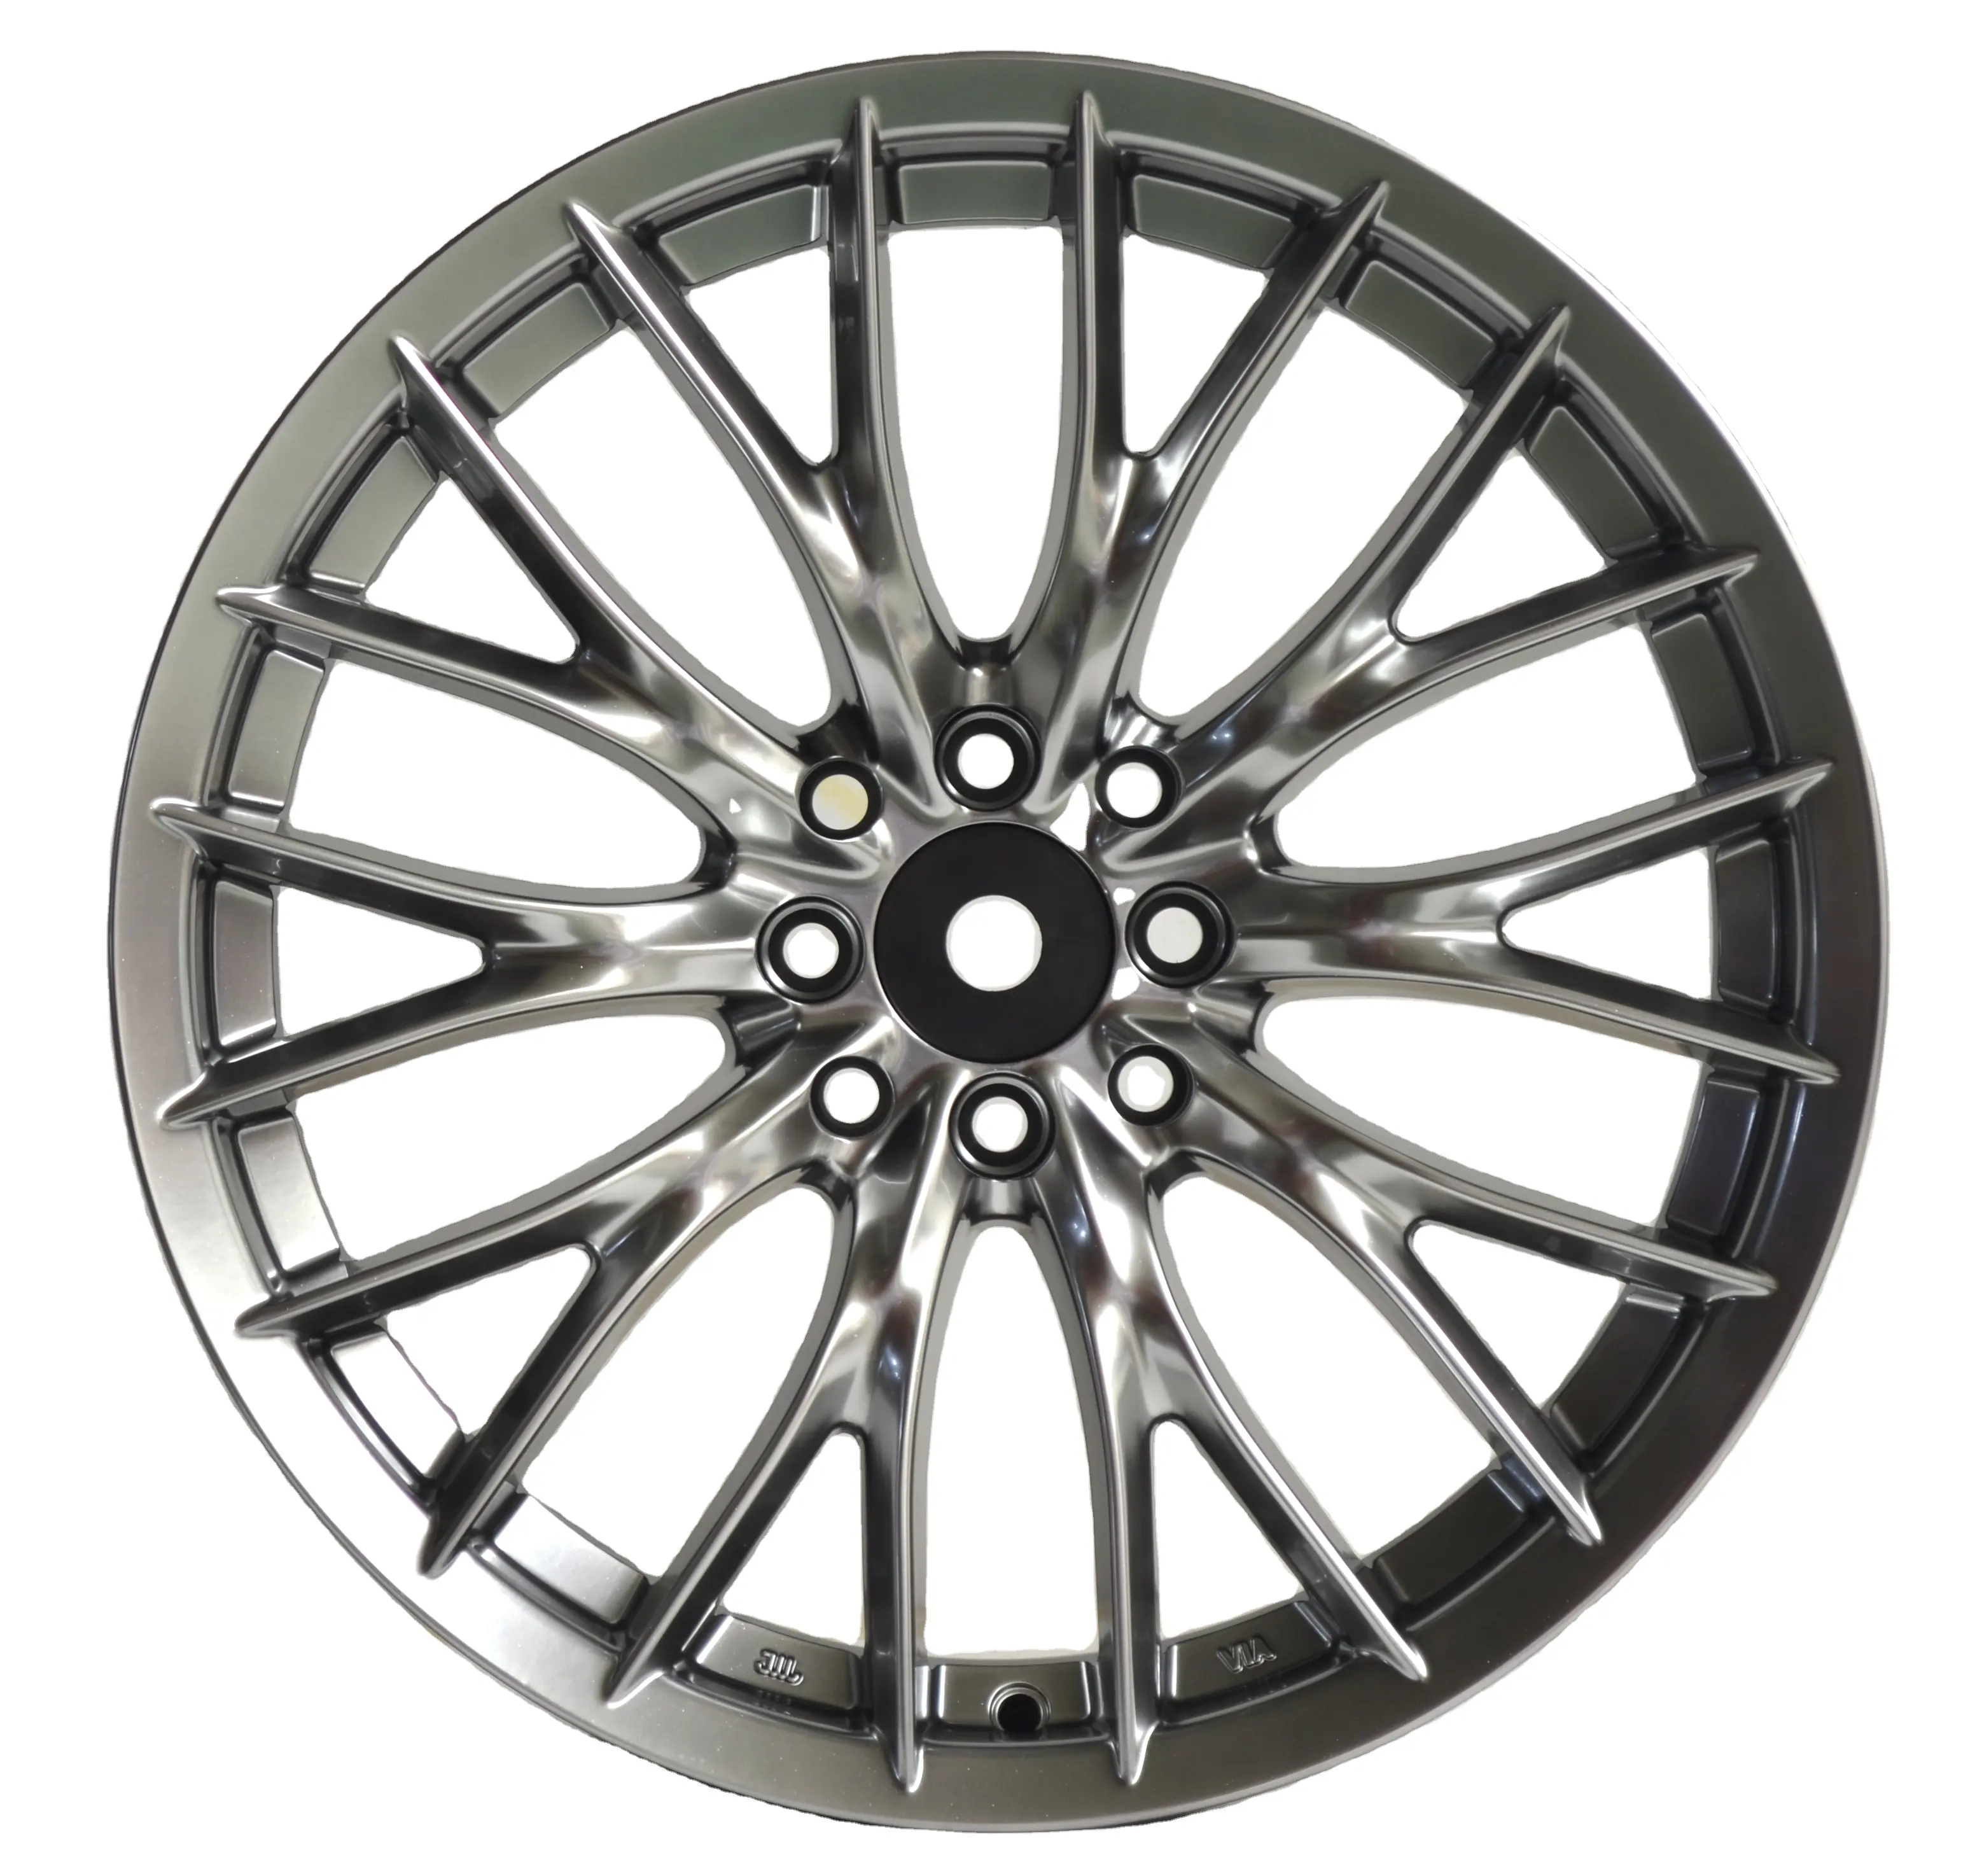 rueda split spokes wheels 14 15 16 17 18 with PCD velg 16 4x100 5x1143 chrome wheels fit for passenger car wheels tires Tiptop